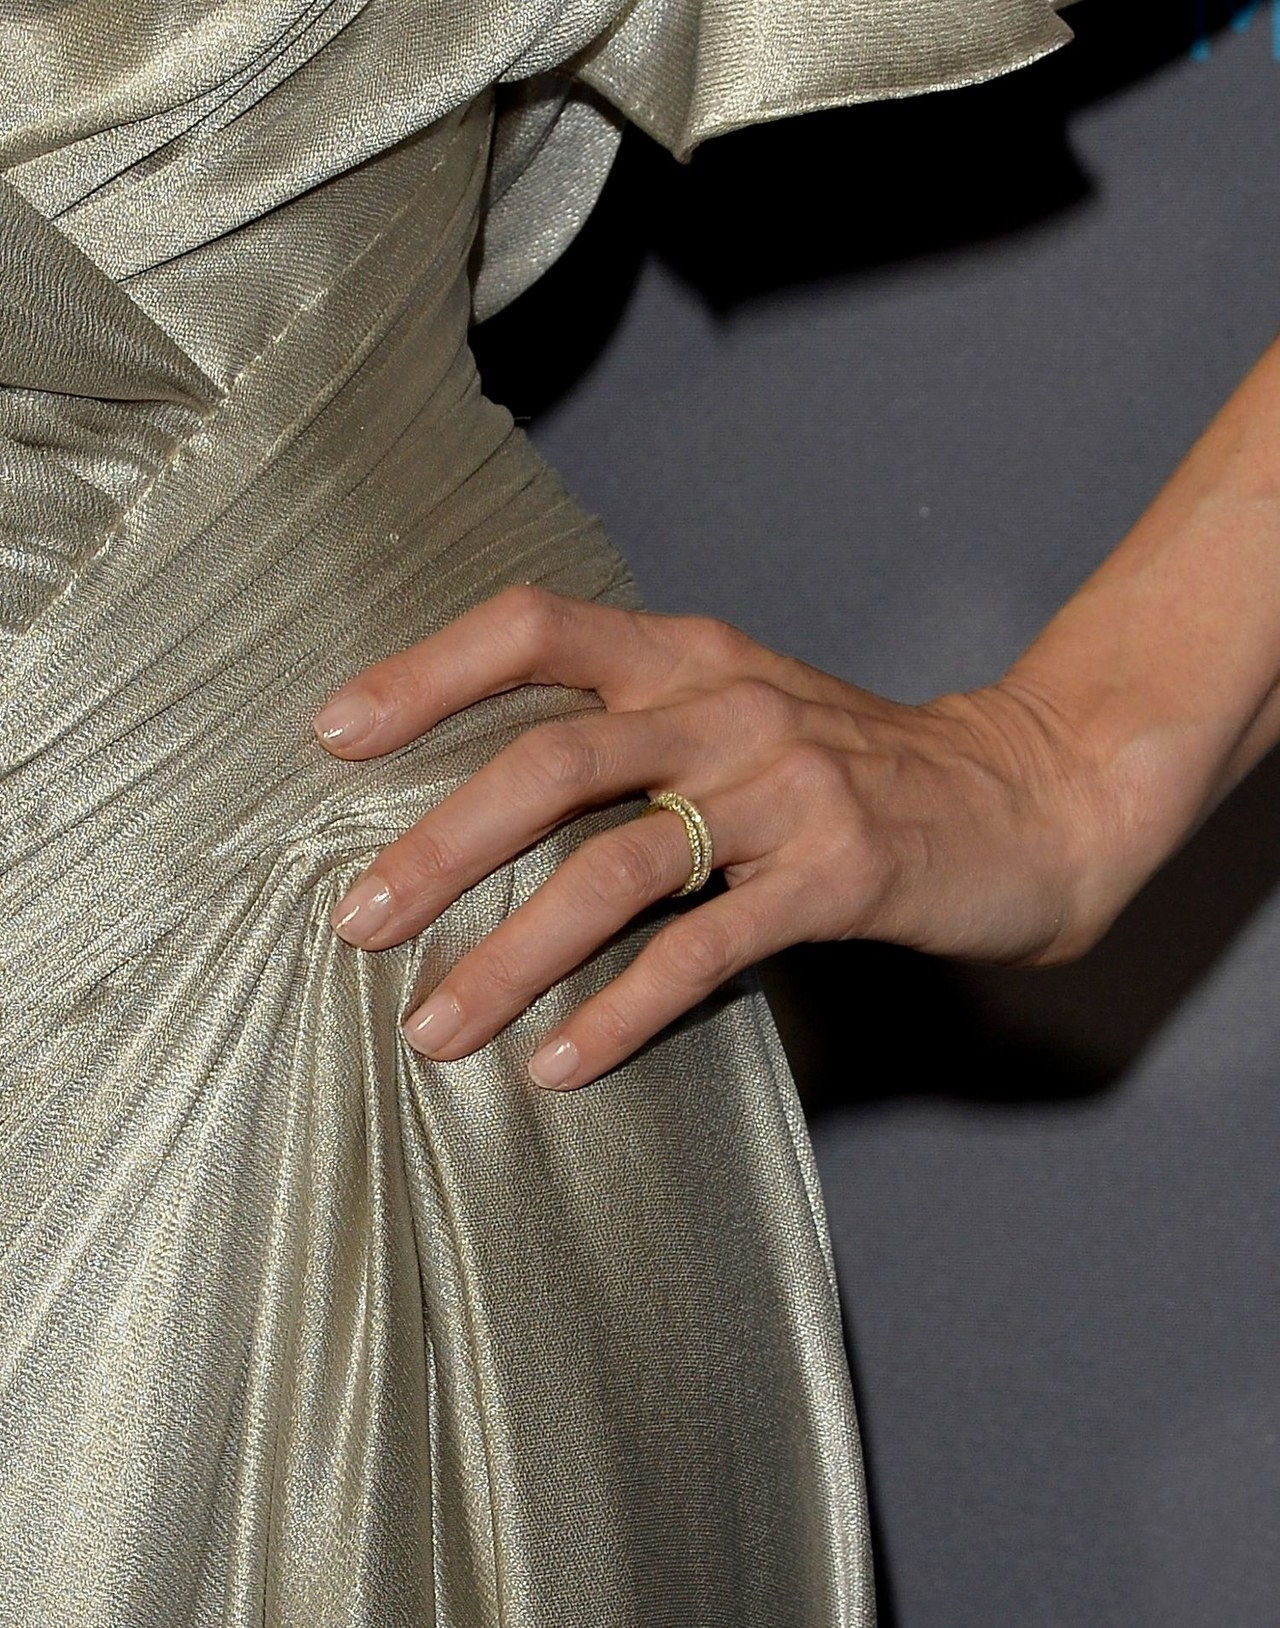 Angelina jolie nails